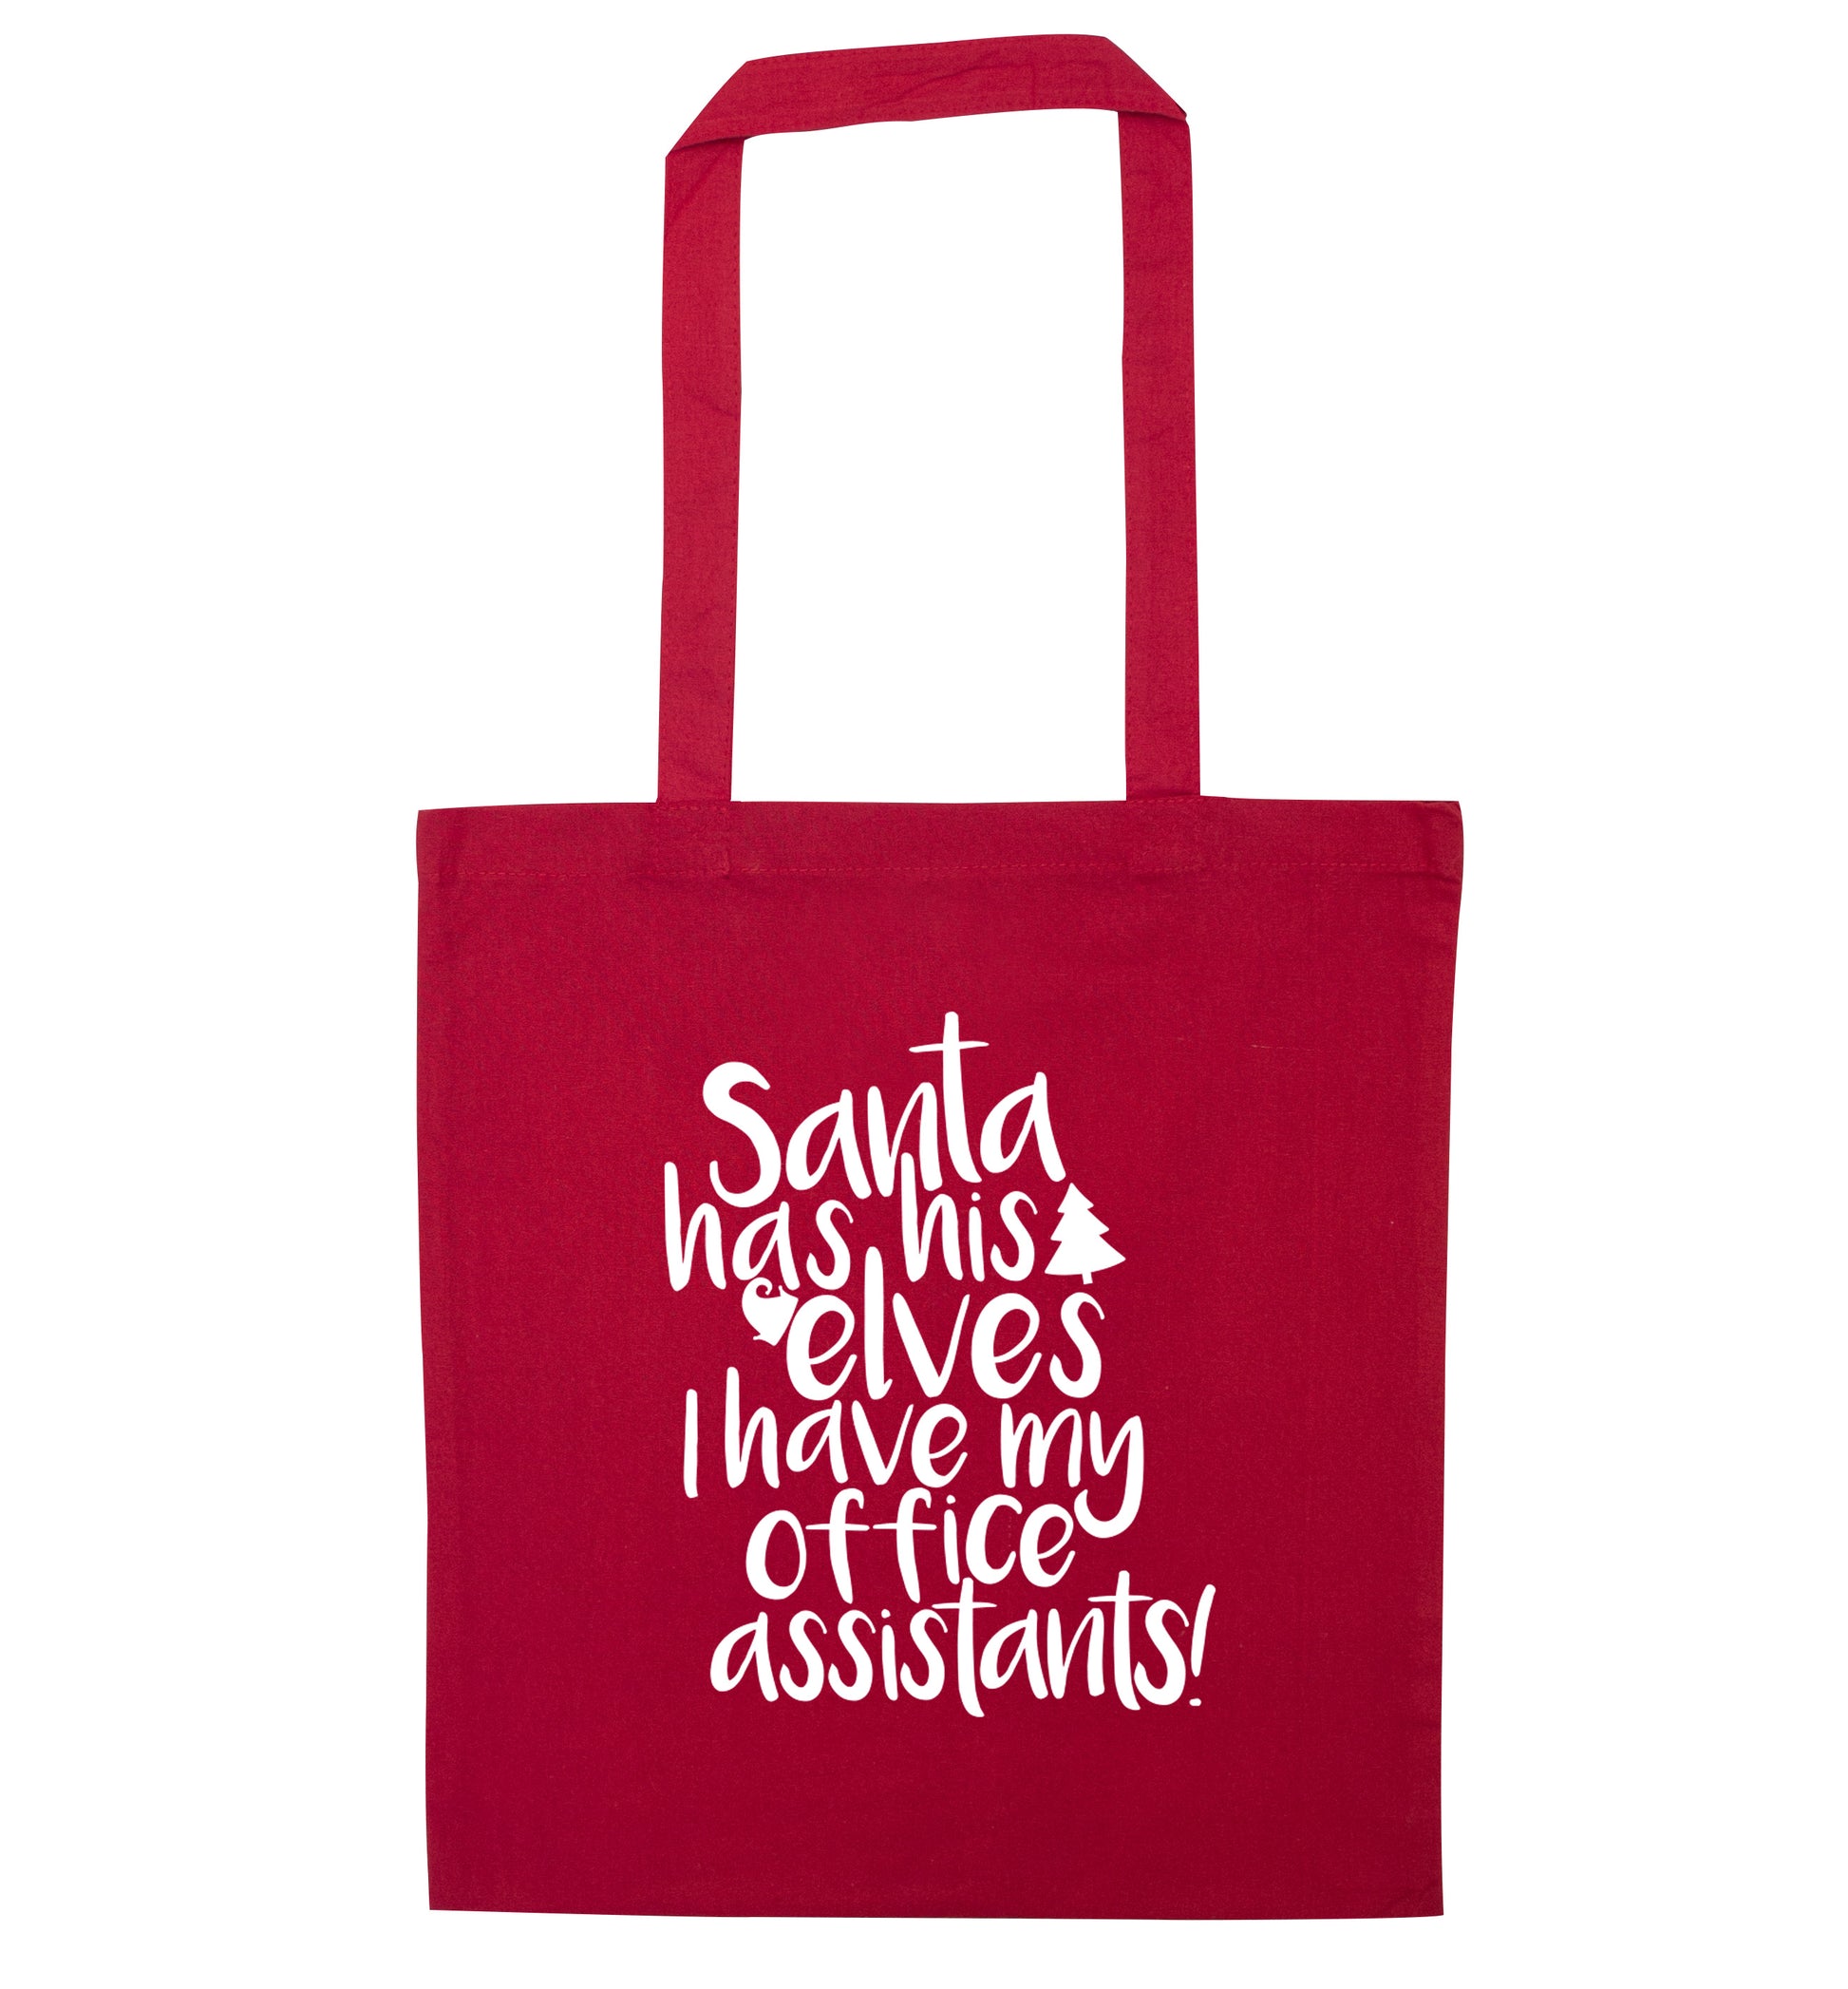 Santa has elves I have office assistants red tote bag